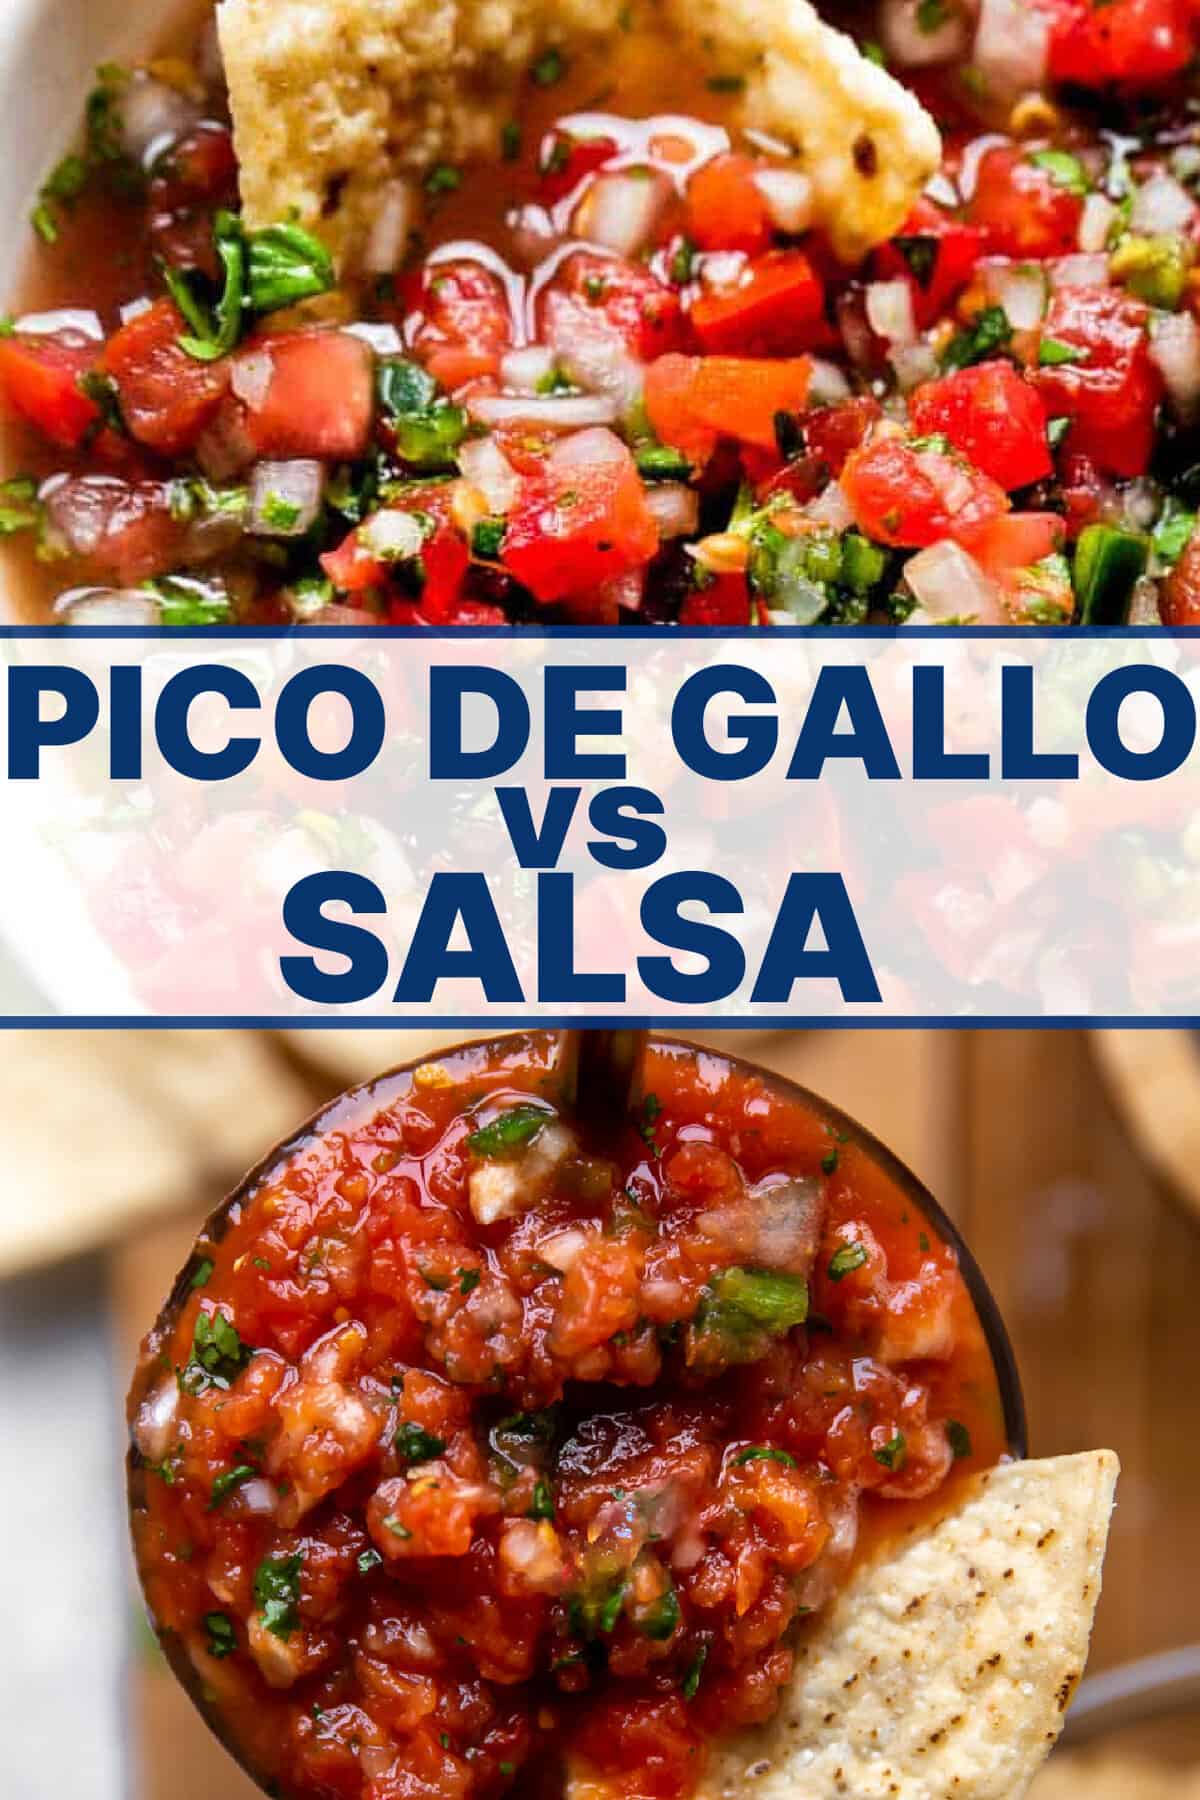 Pico de Gallo vs salsa avec des images de pico de Gallo en haut et de salsa en bas.